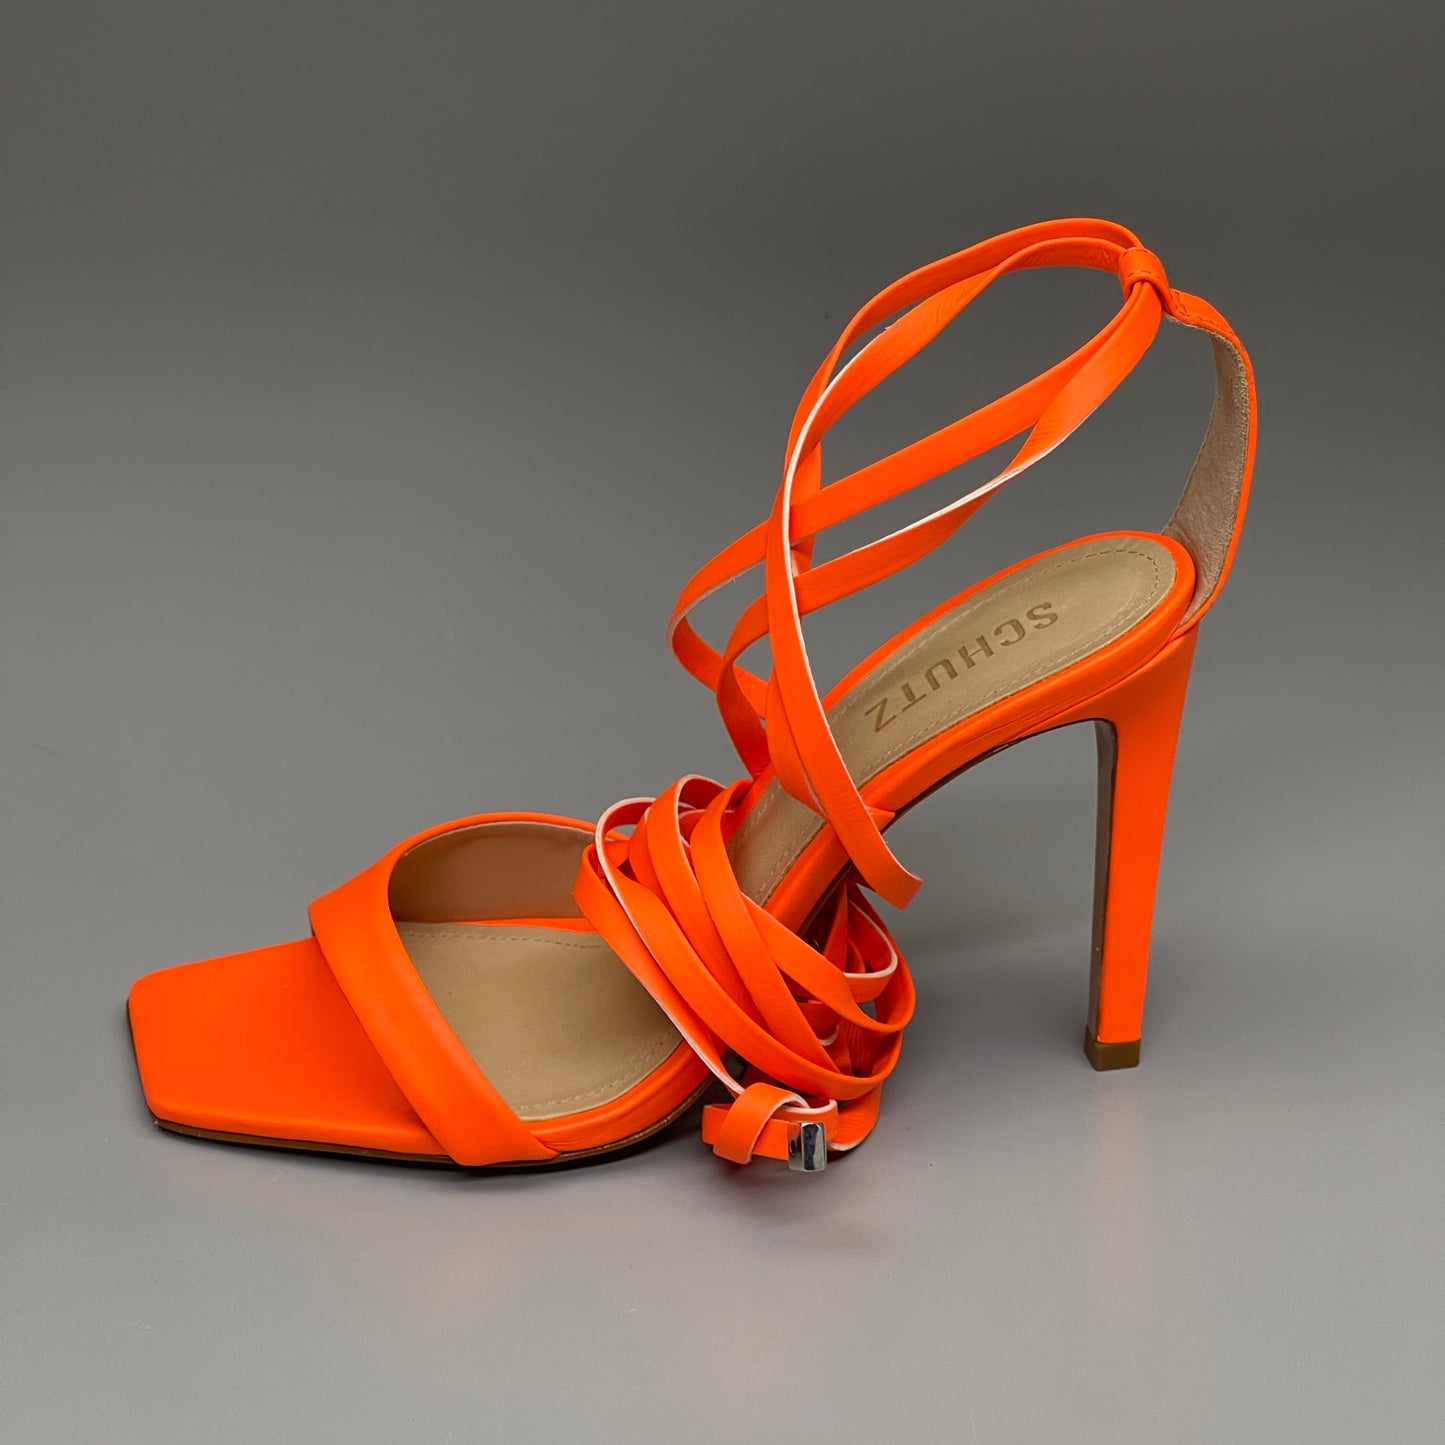 SCHUTZ Bryce Ankle Tie Women's High Heel Leather Strappy Sandal Acid Orange Sz 9 (New)